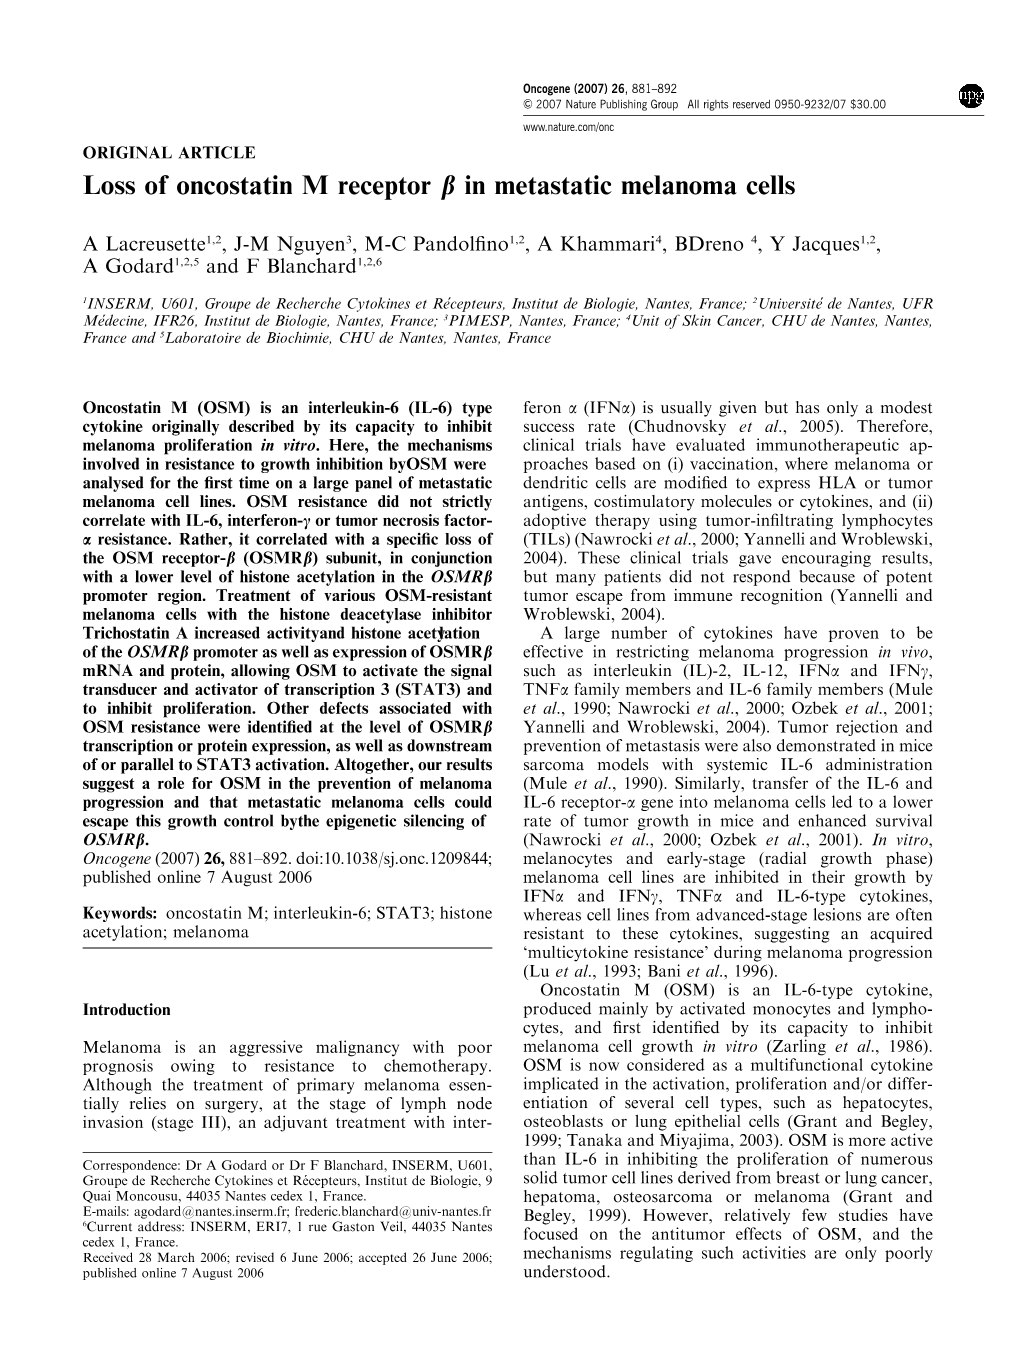 Loss of Oncostatin M Receptor B in Metastatic Melanoma Cells